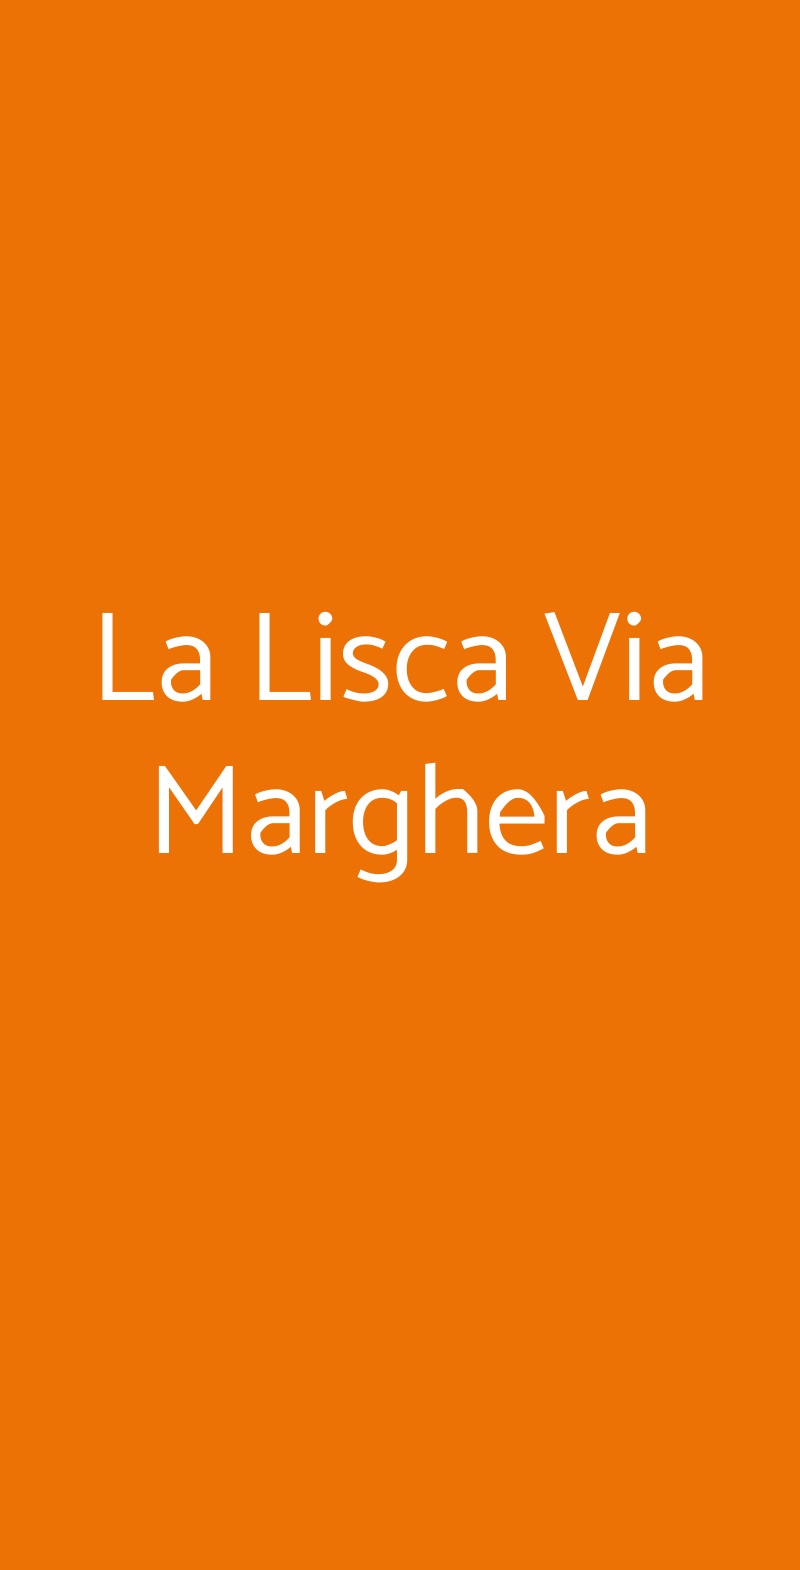 La Lisca Via Marghera Milano menù 1 pagina